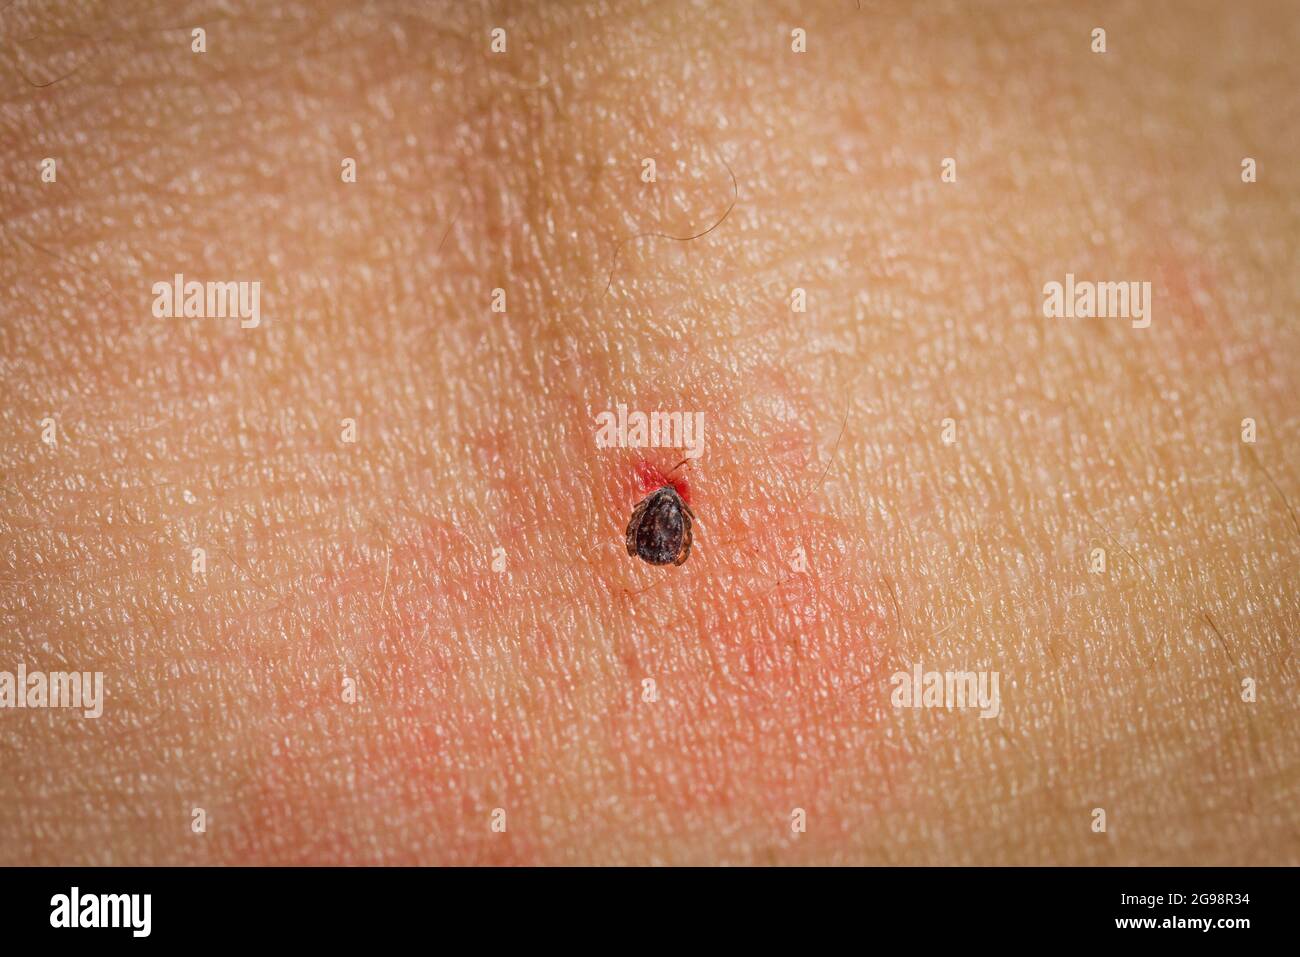 Dangerous tick over the skin closeup view Stock Photo